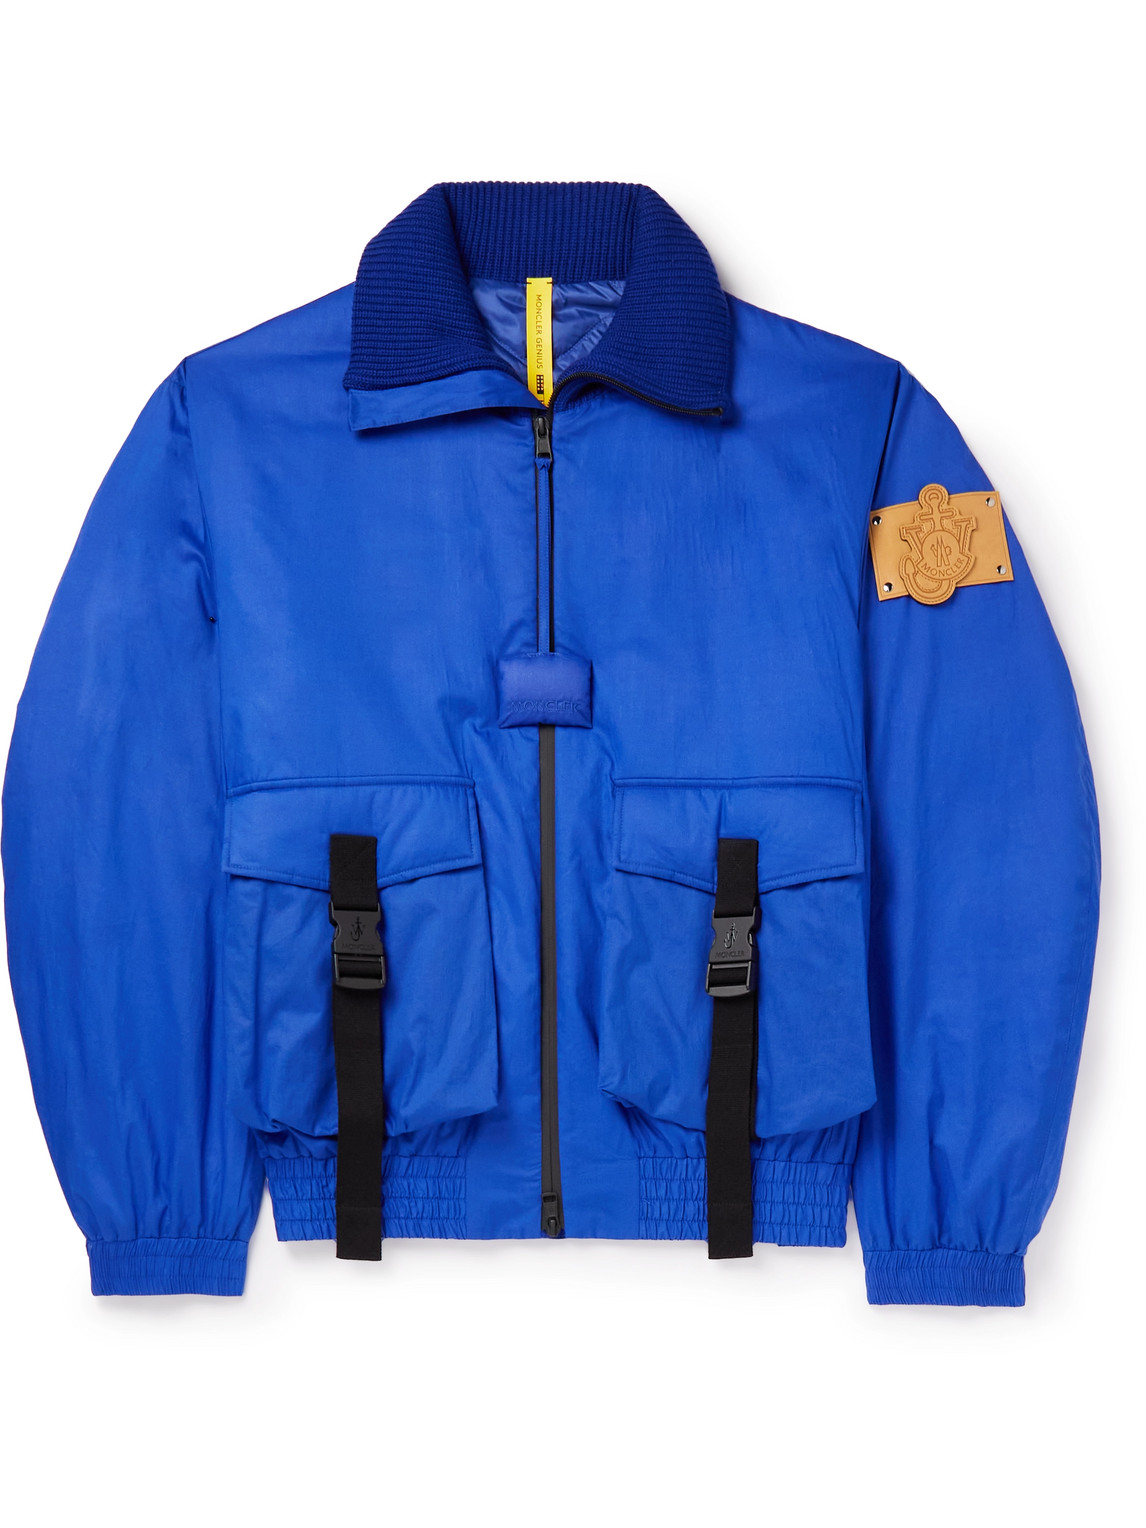 Moncler Genius - 1 Moncler JW Anderson Skiddaw Logo-Appliquéd Padded Shell Down Jacket - Men - Blue - 3 von Moncler Genius